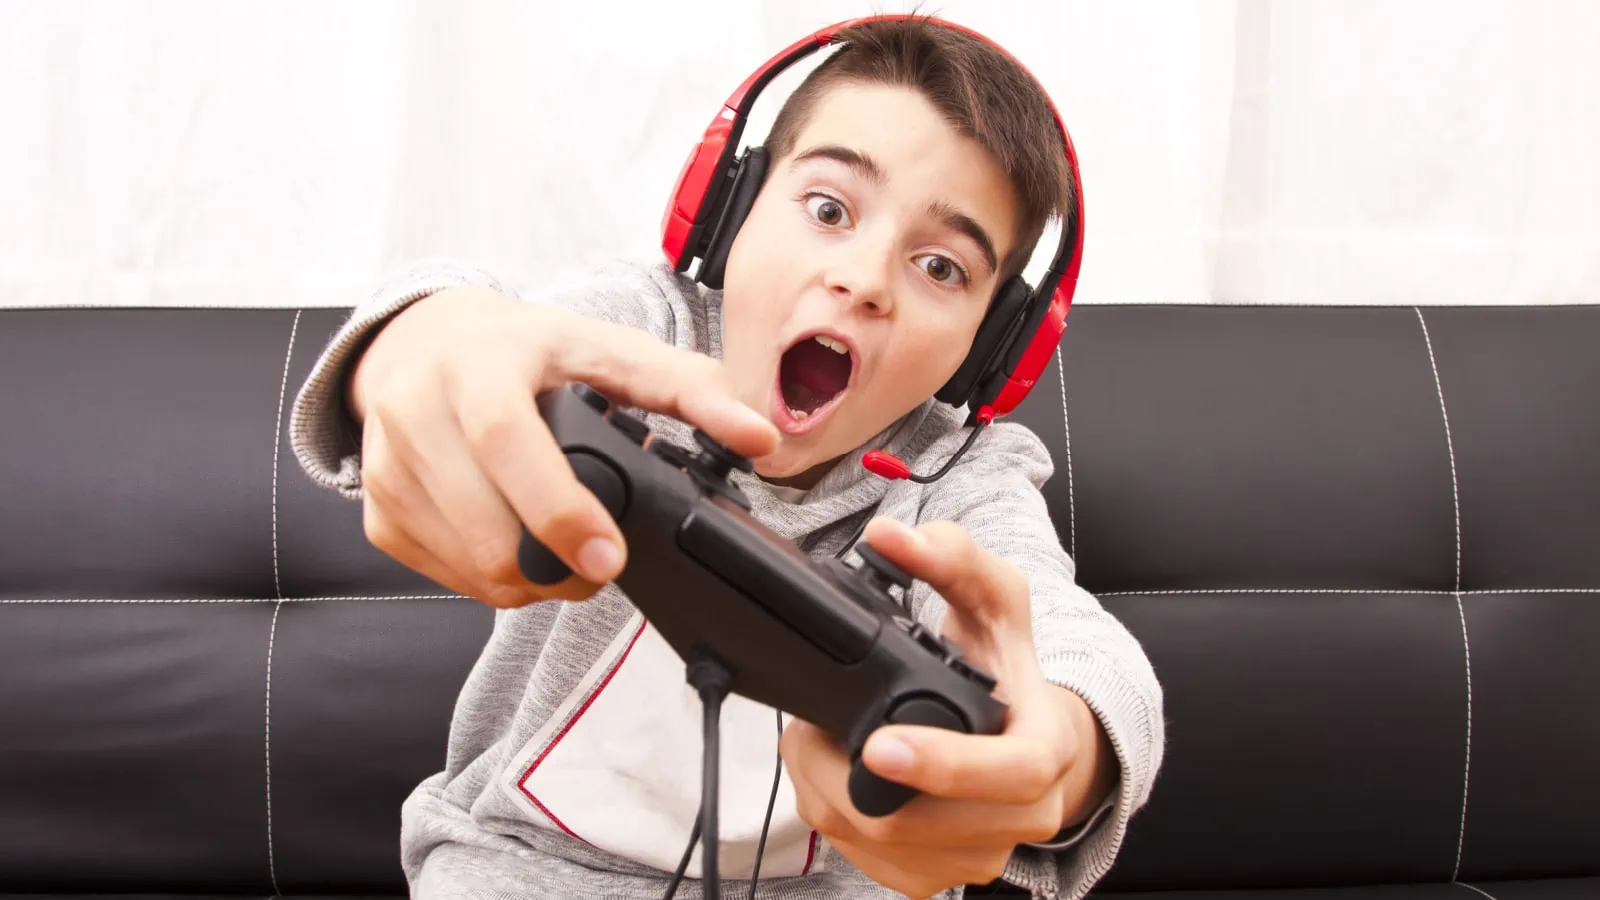 Kid playing computer games